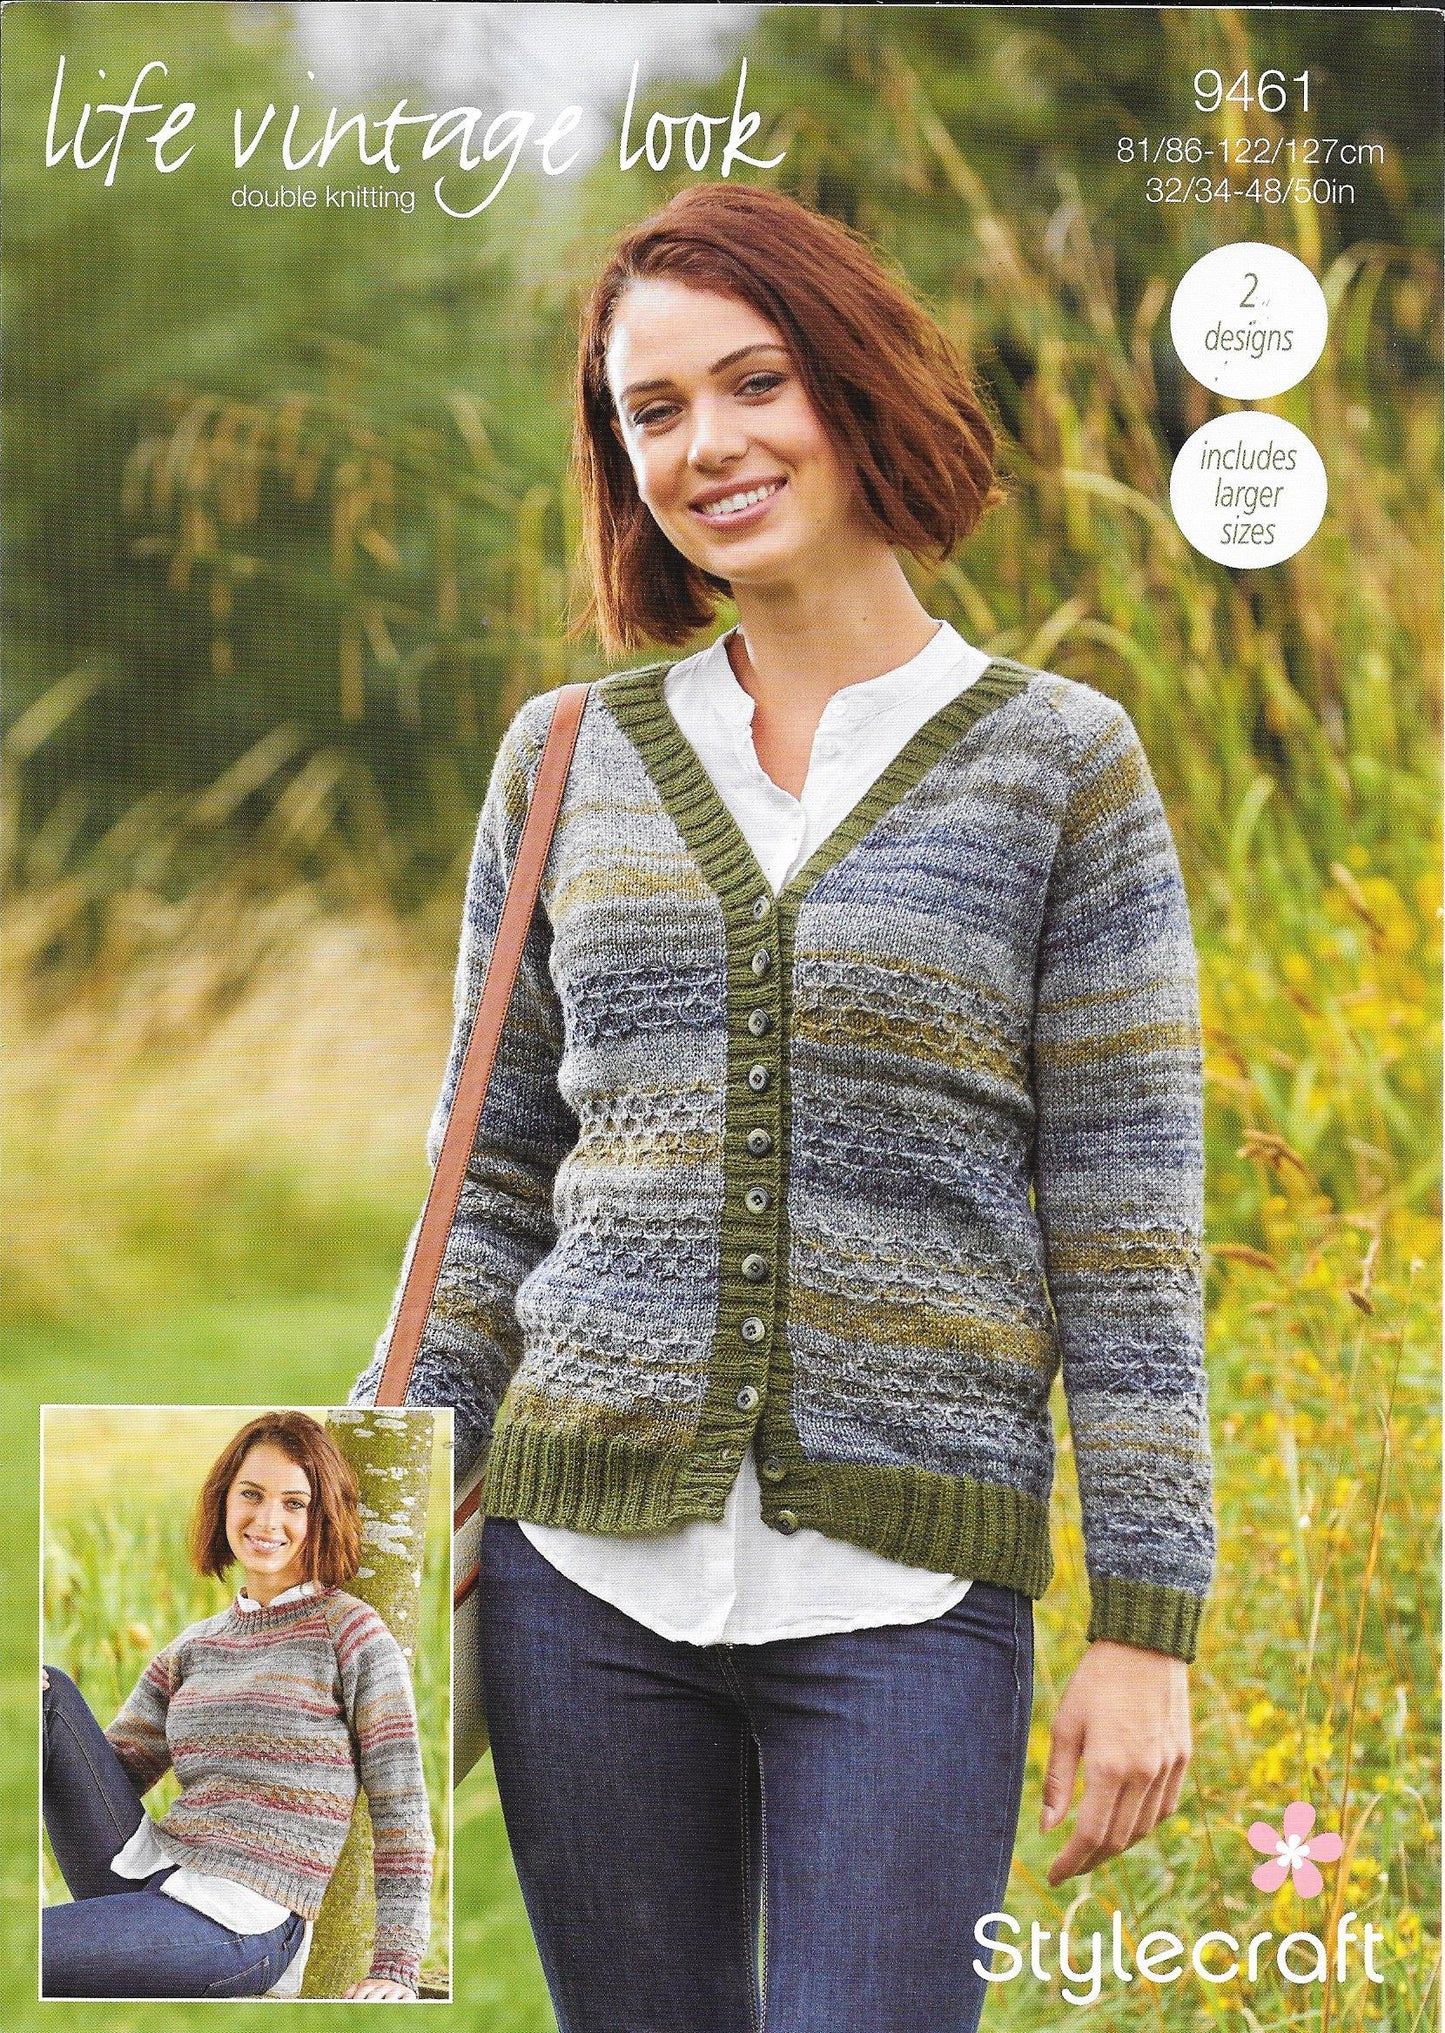 9461 Stylecraft Life Vintage dk ladies cardigan and sweater knitting pattern